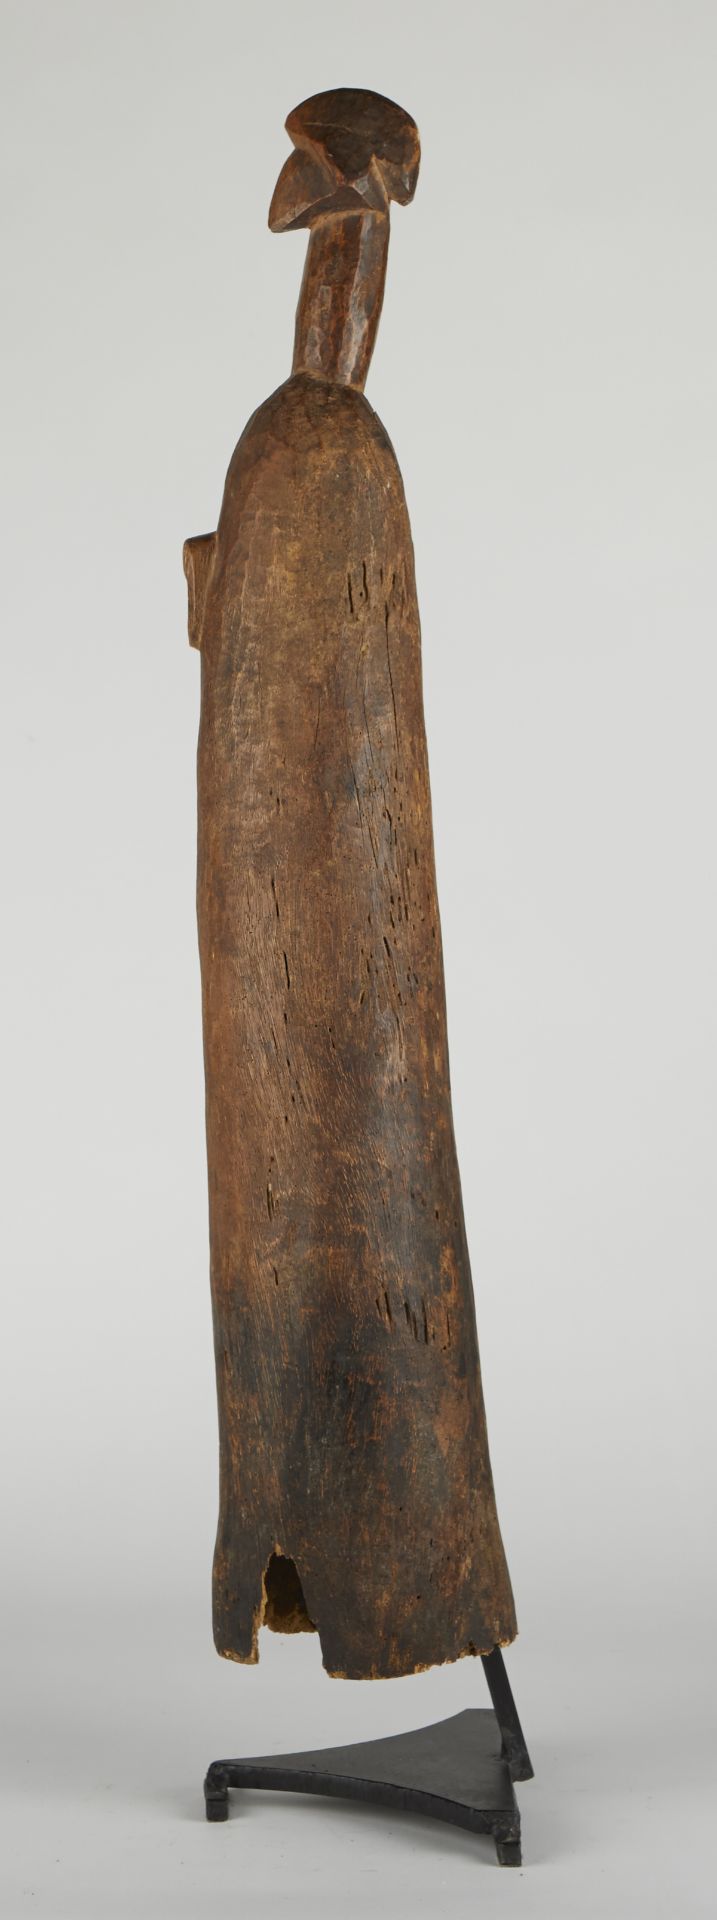 Mossi Burkina Faso African Instrument - Image 5 of 8